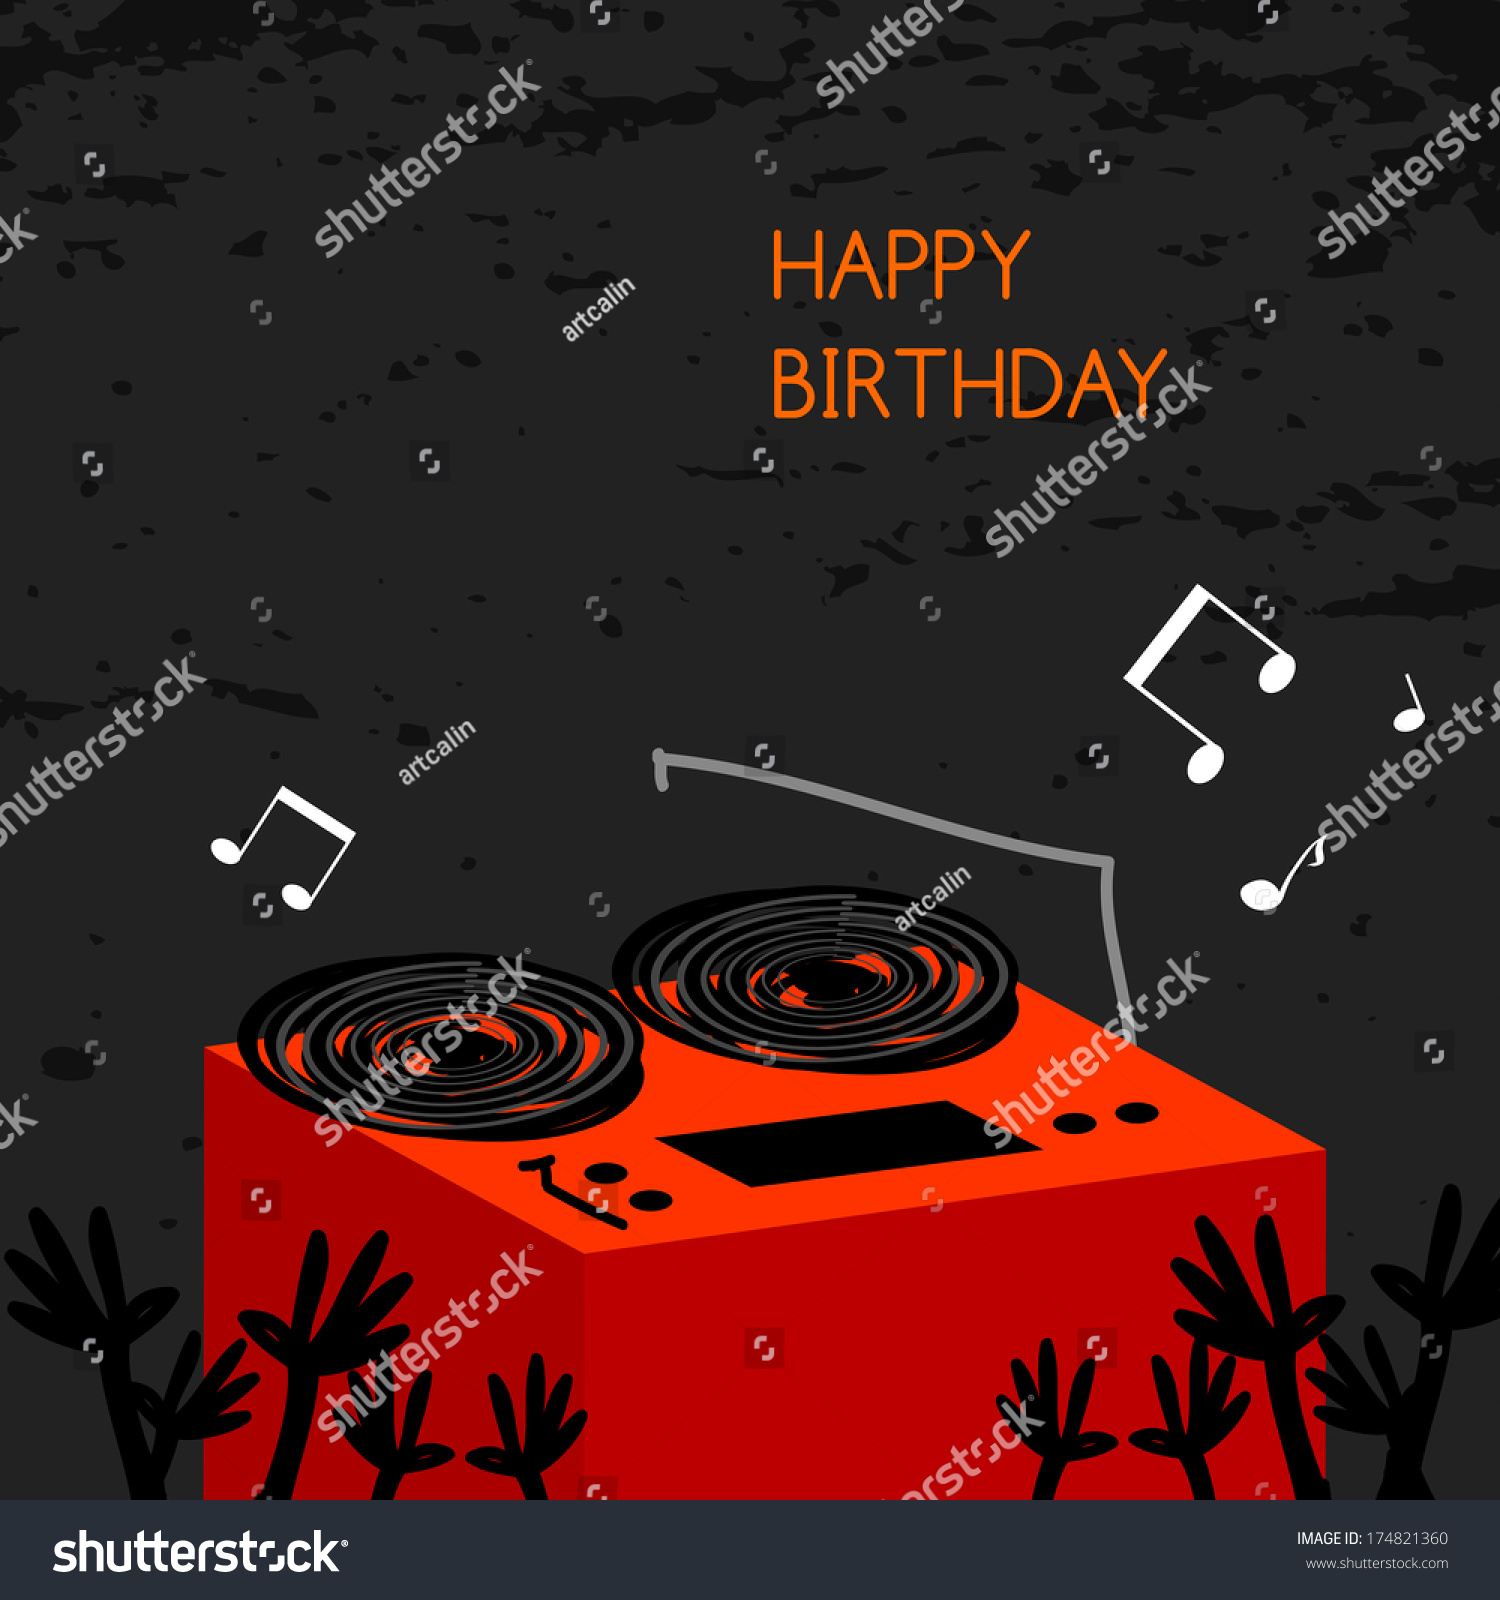 Happy Birthday Greeting Card, Anniversary Vector Illustration, With Dj ...